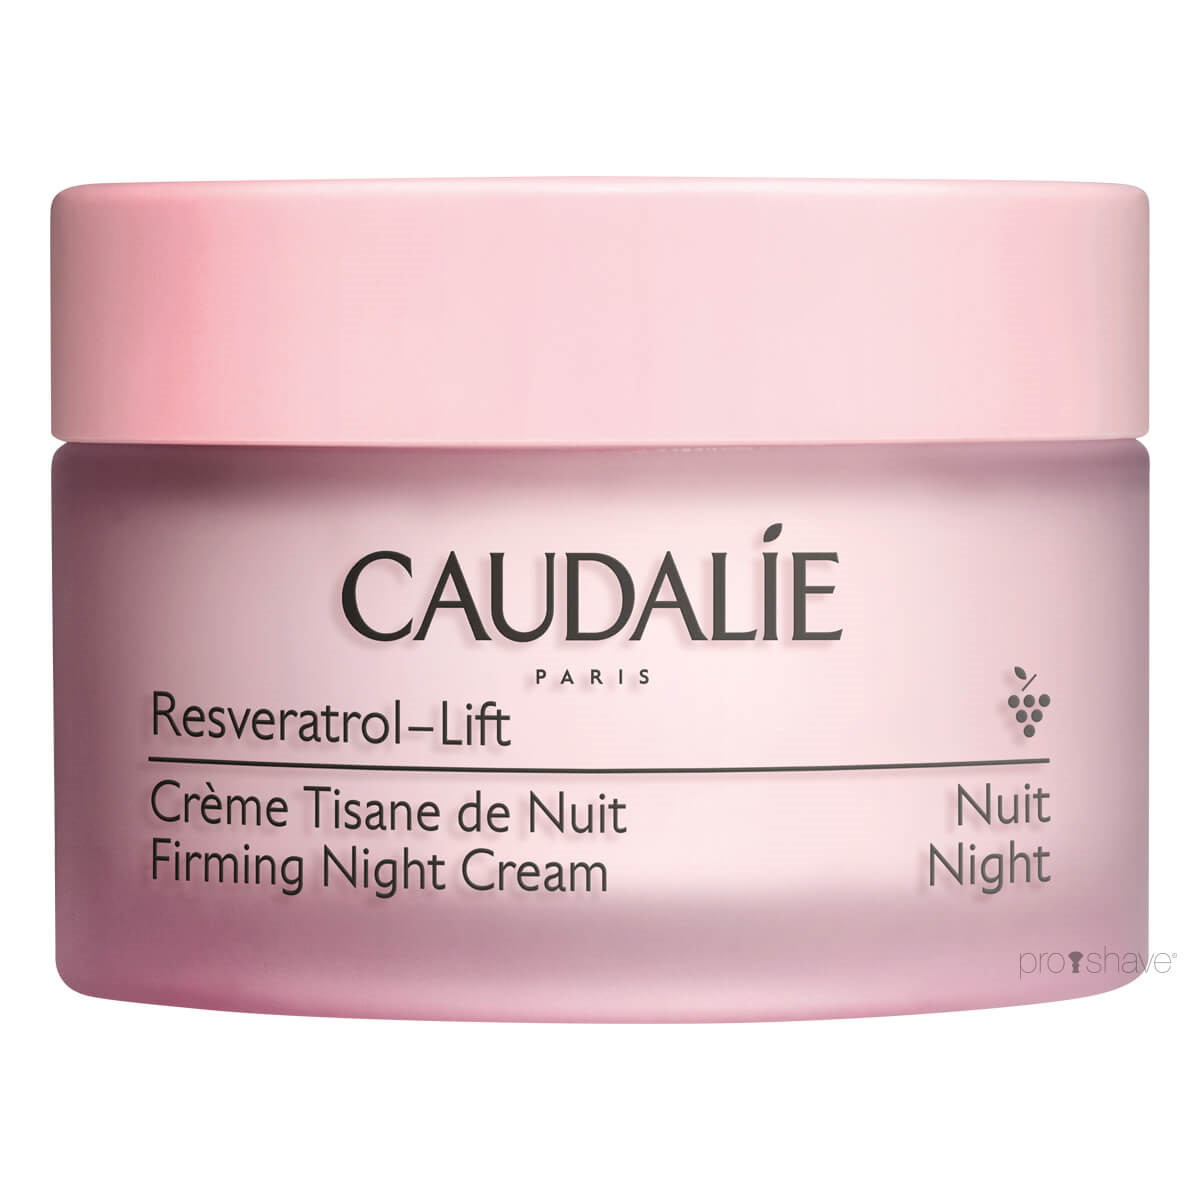 Billede af Caudalie Resveratrol Lift, Firming Night Cream, 50 ml.